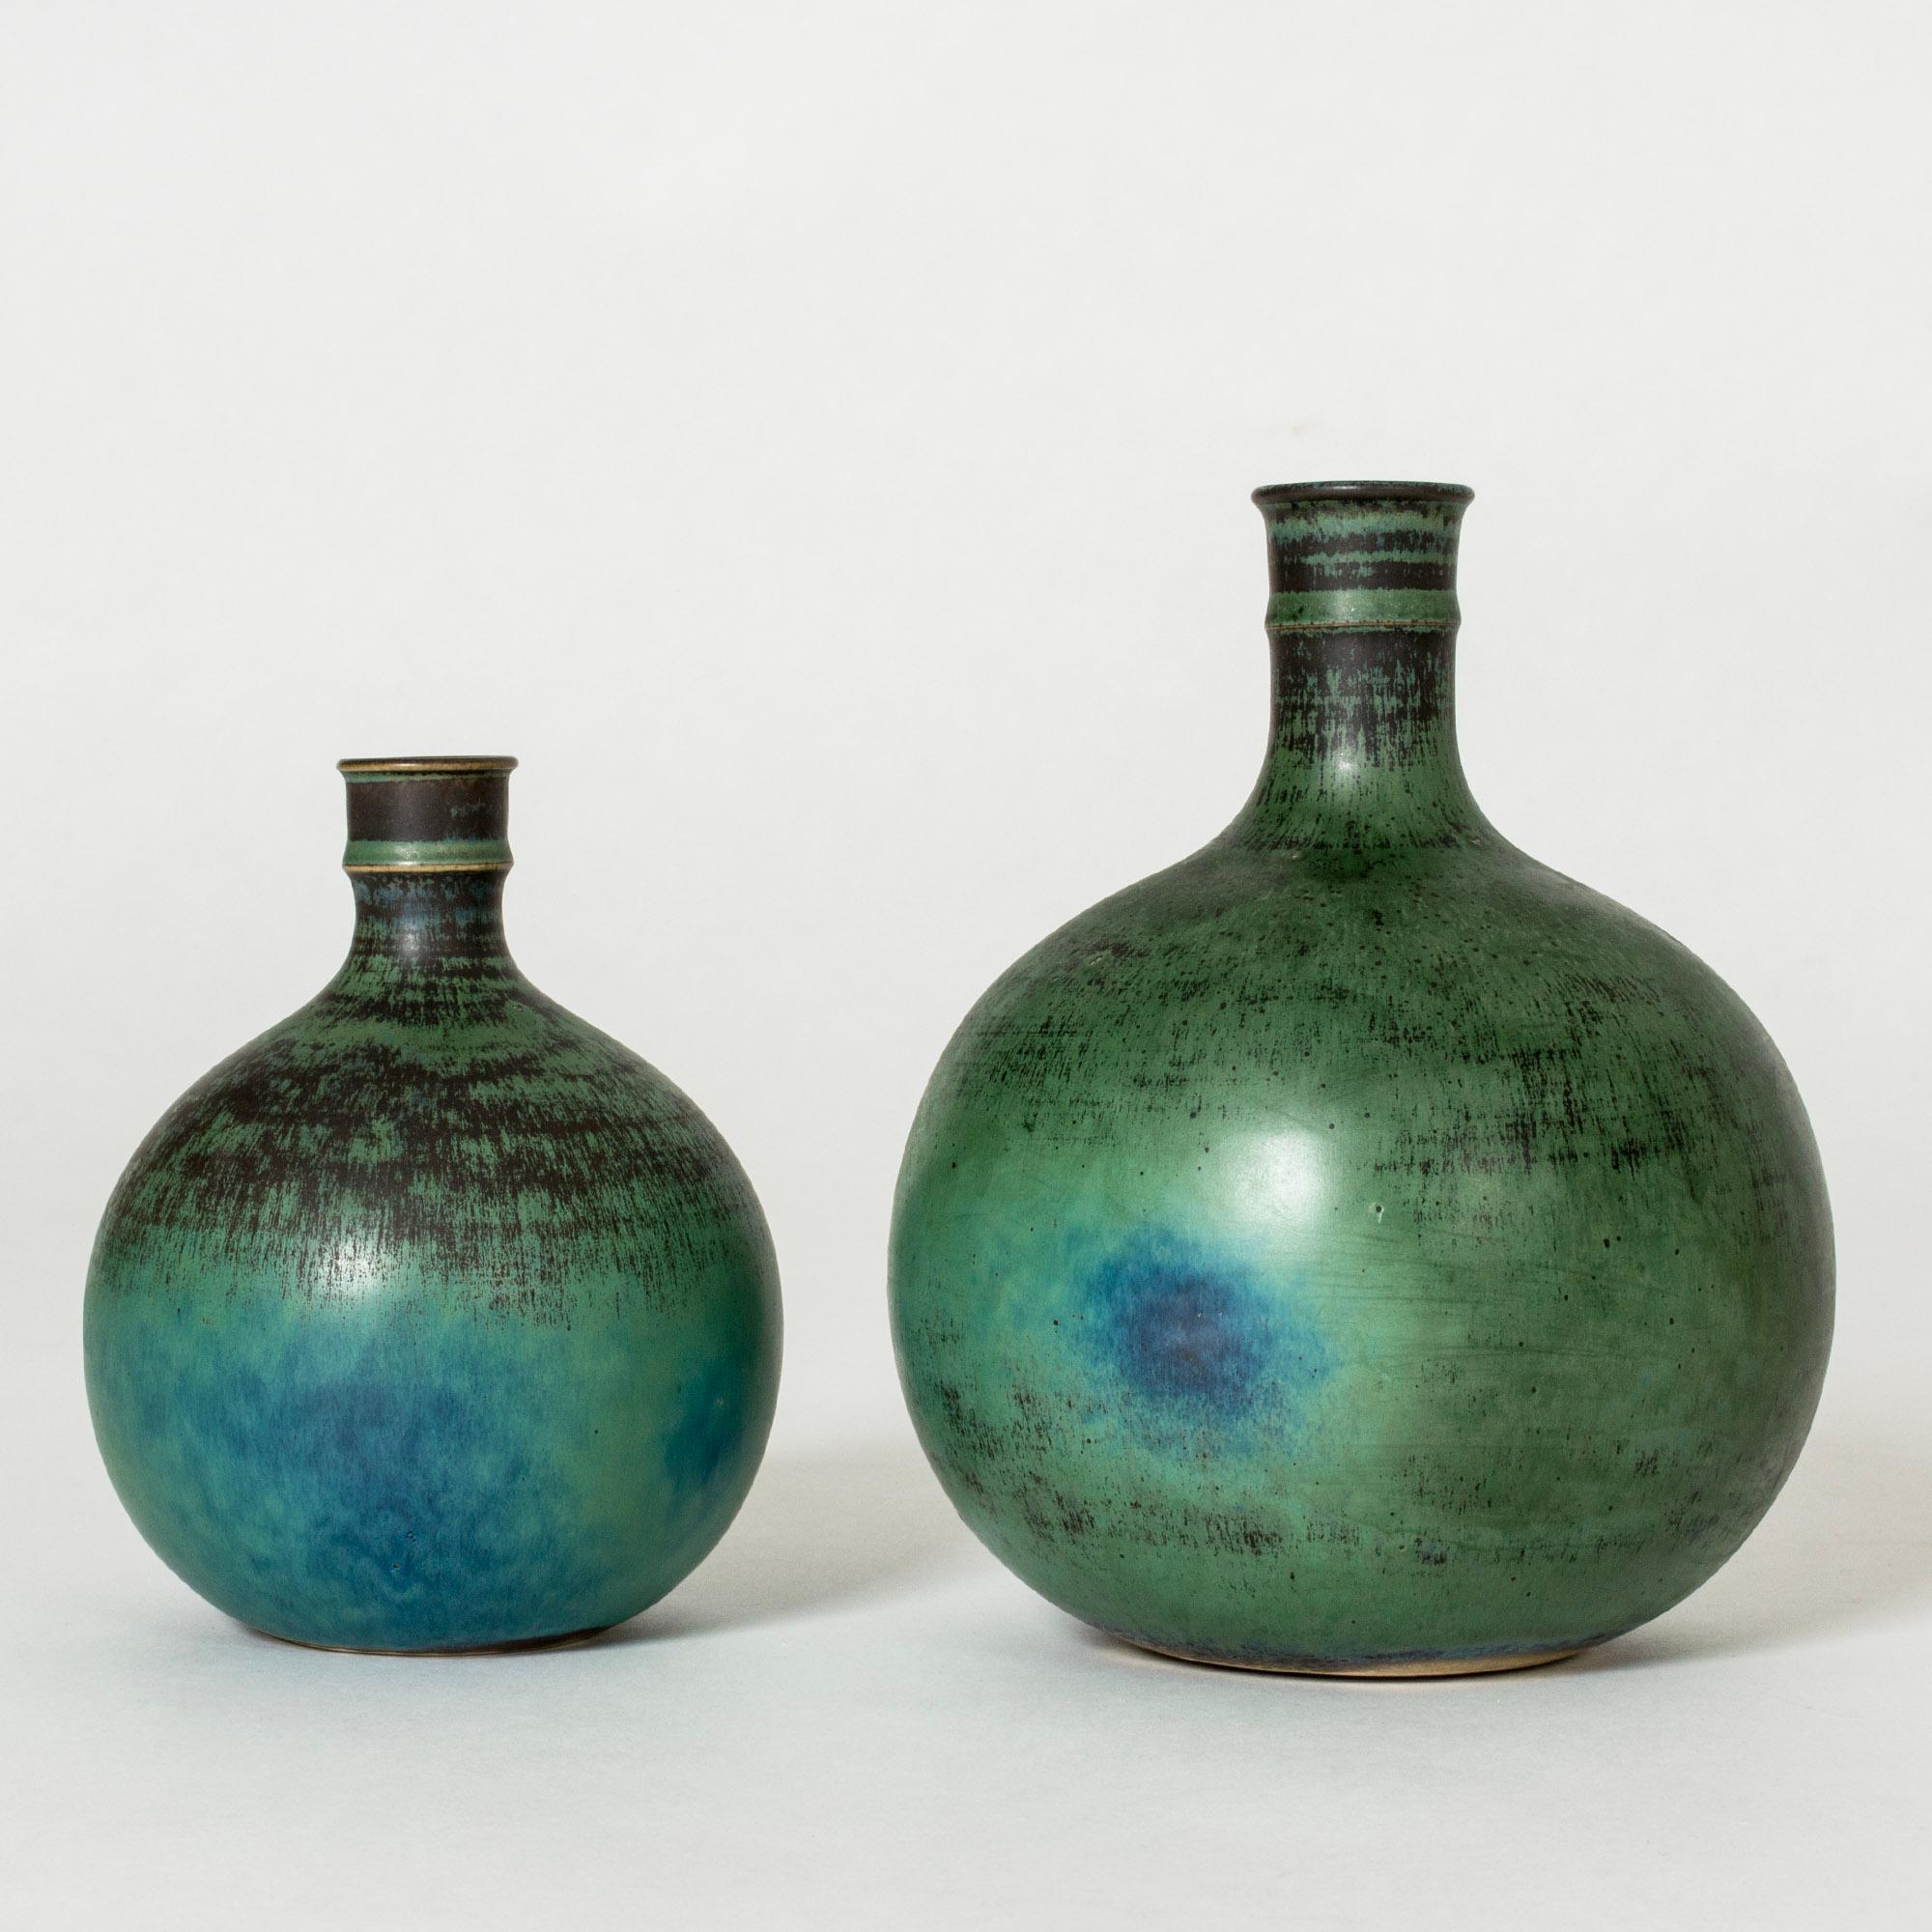 Swedish Midcentury Stoneware Vases by Stig Lindberg, Gustavsberg, Sweden, 1960s For Sale